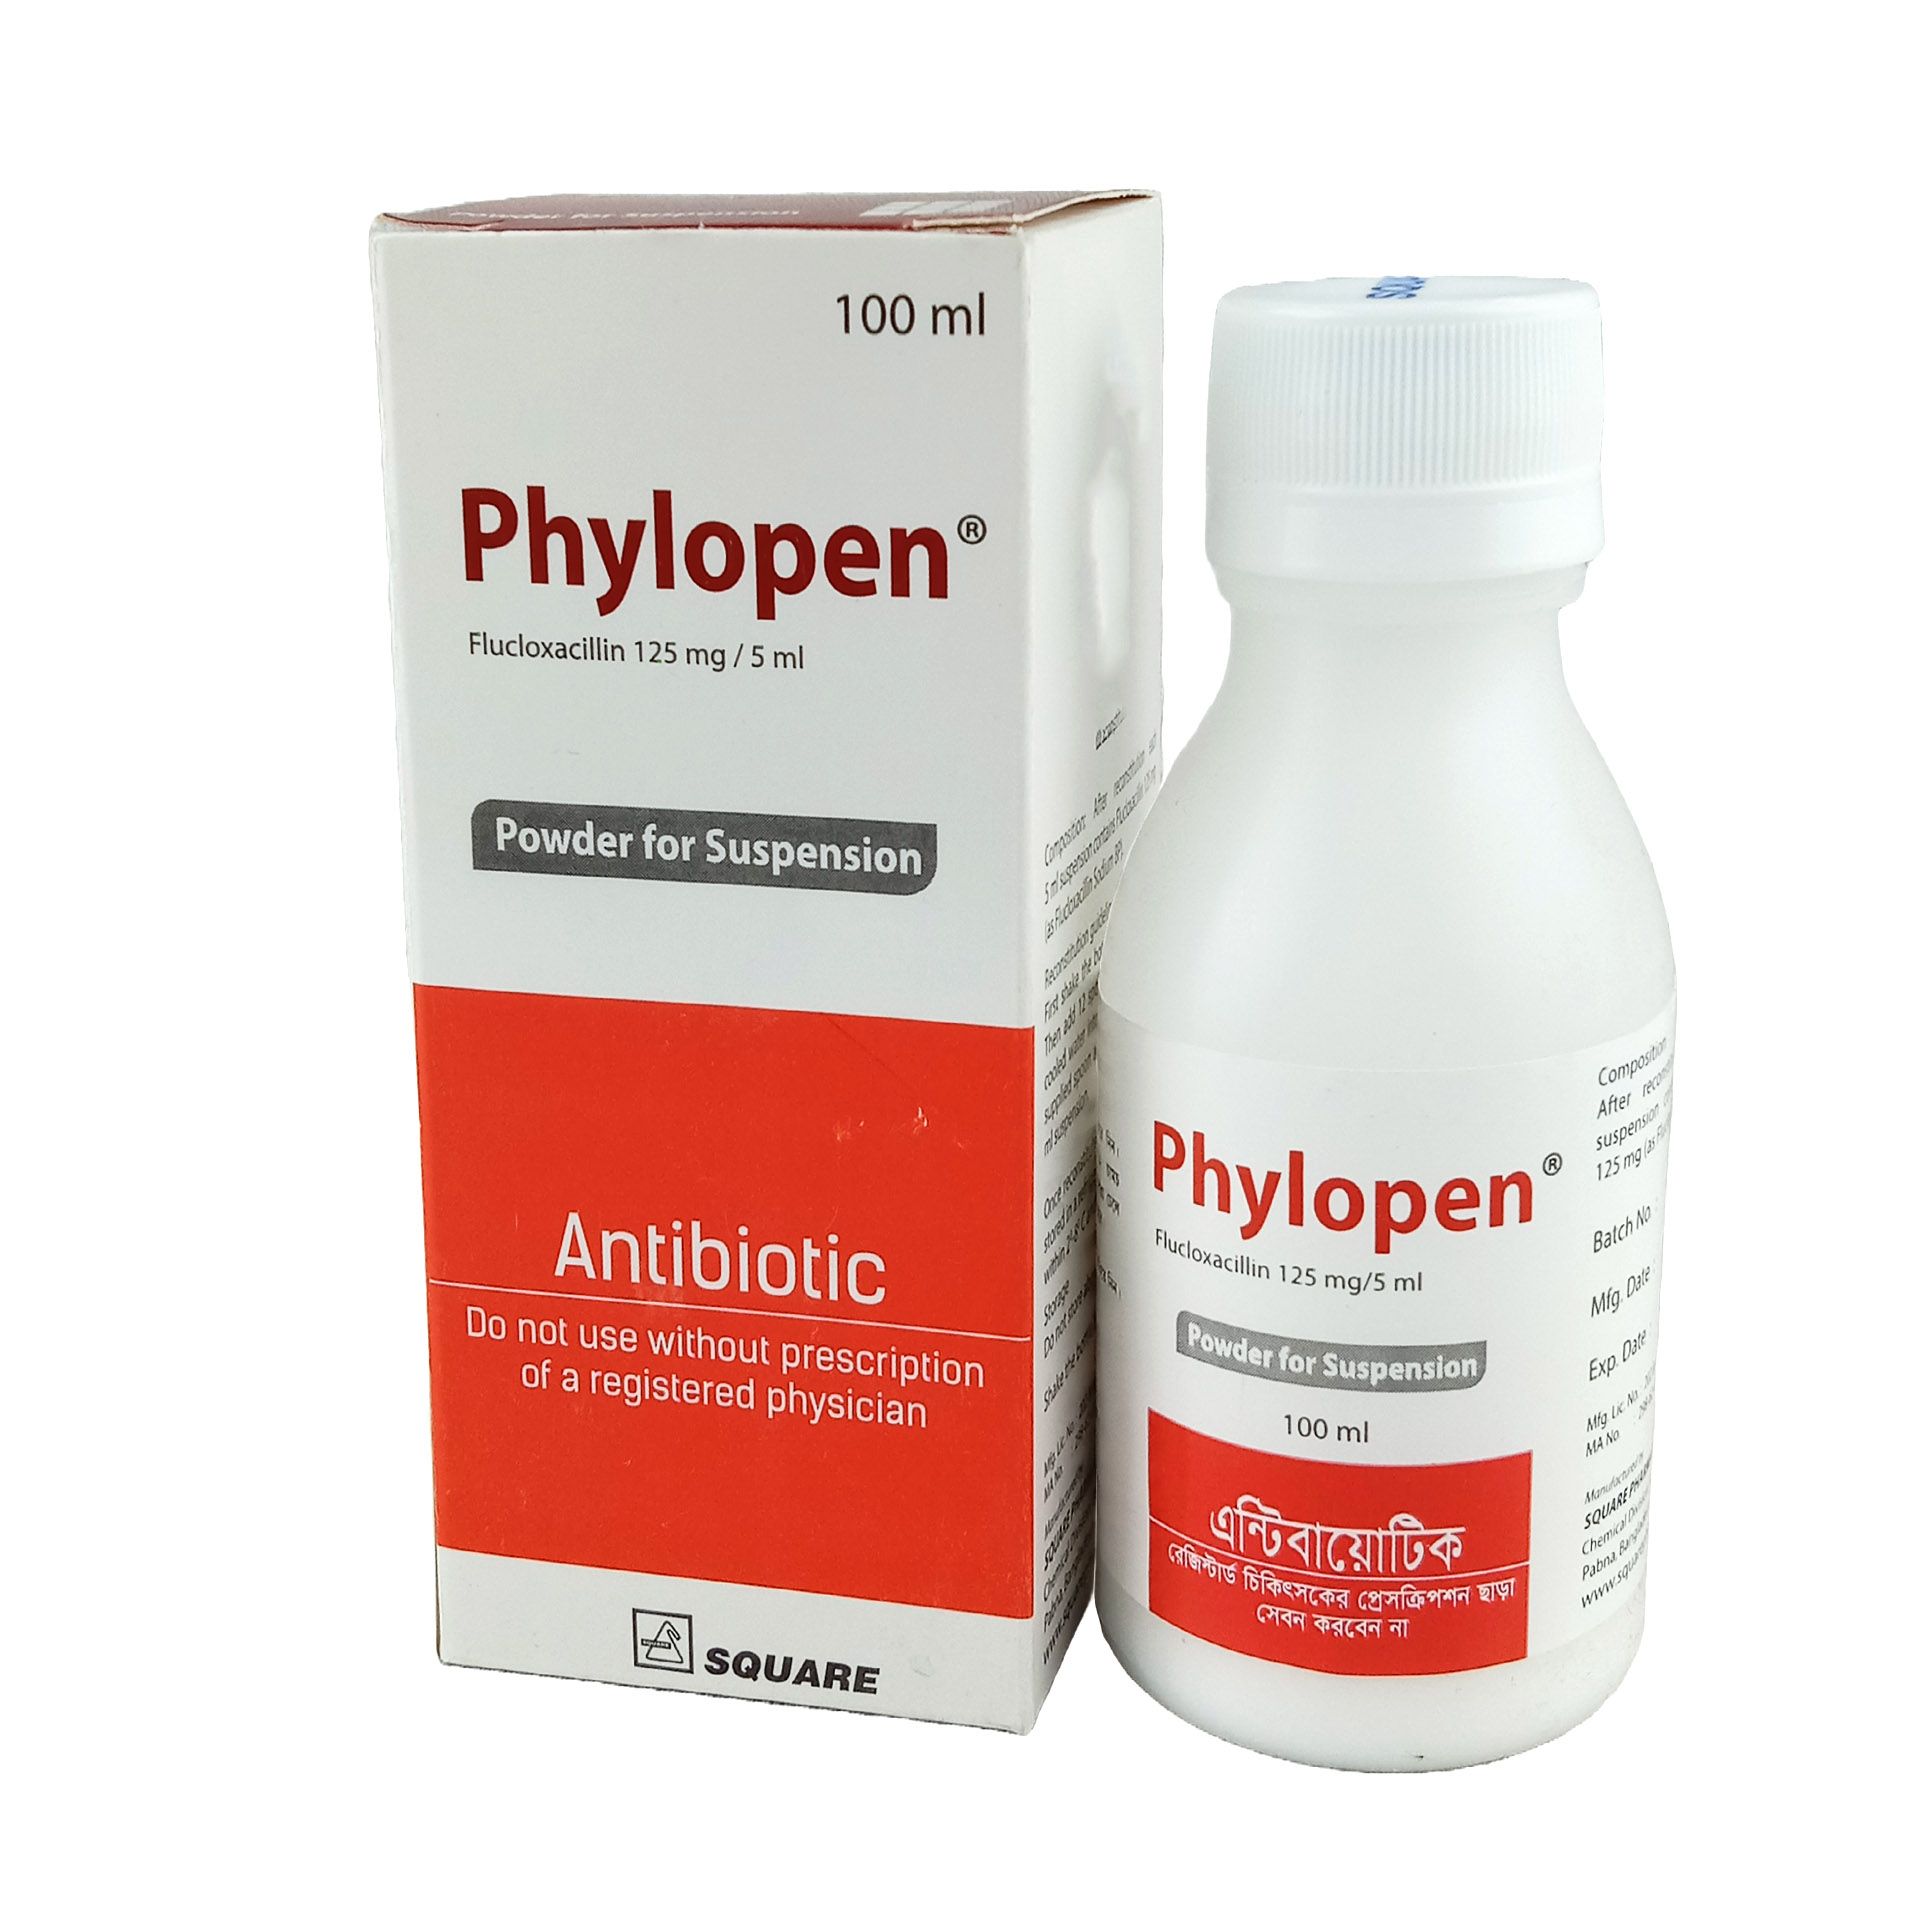 Phylopen 125mg/5ml Powder for Suspension